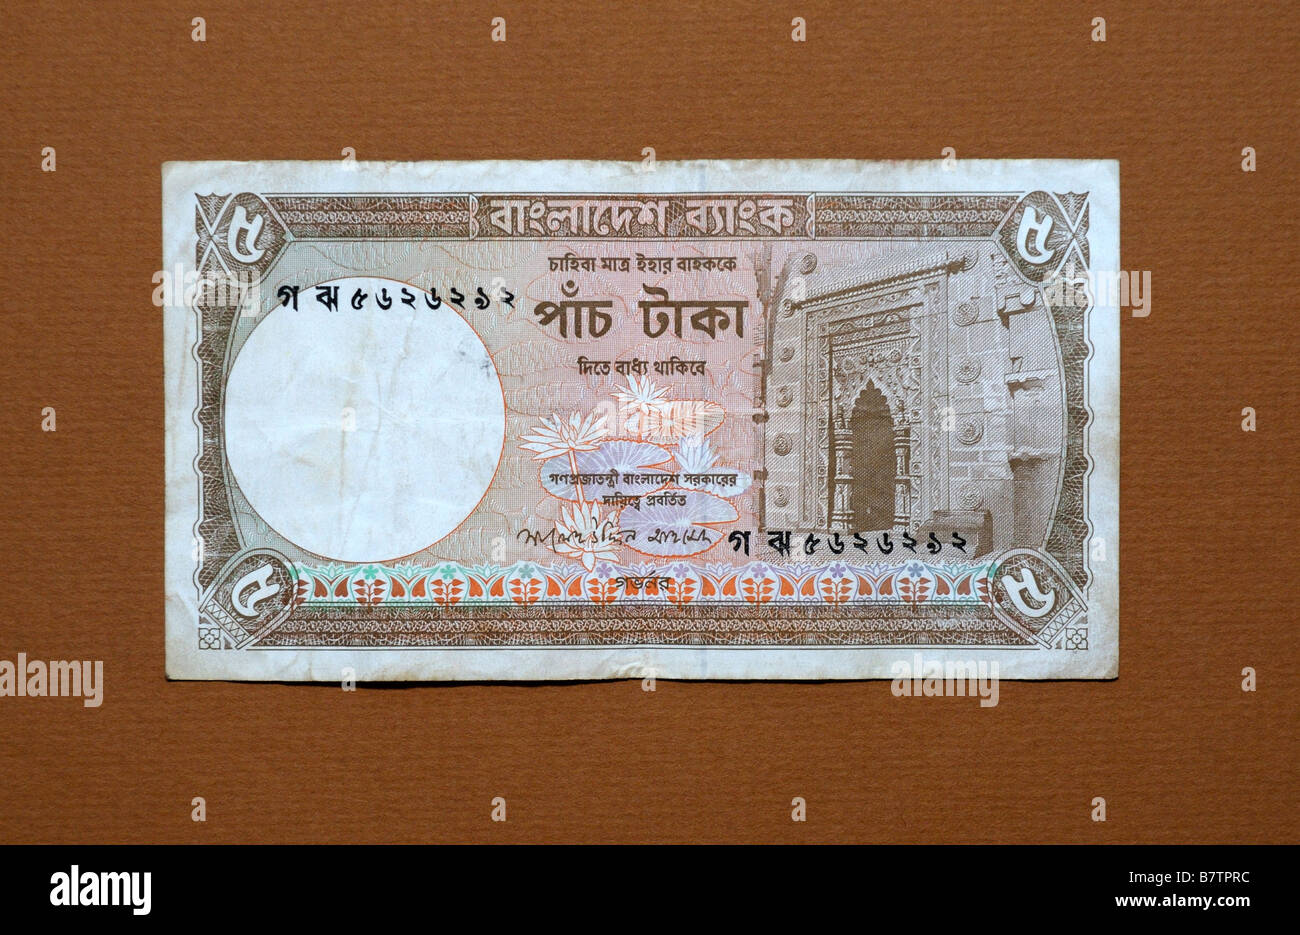 Bangladesh 5 Five Taka Bank note Stock Photo